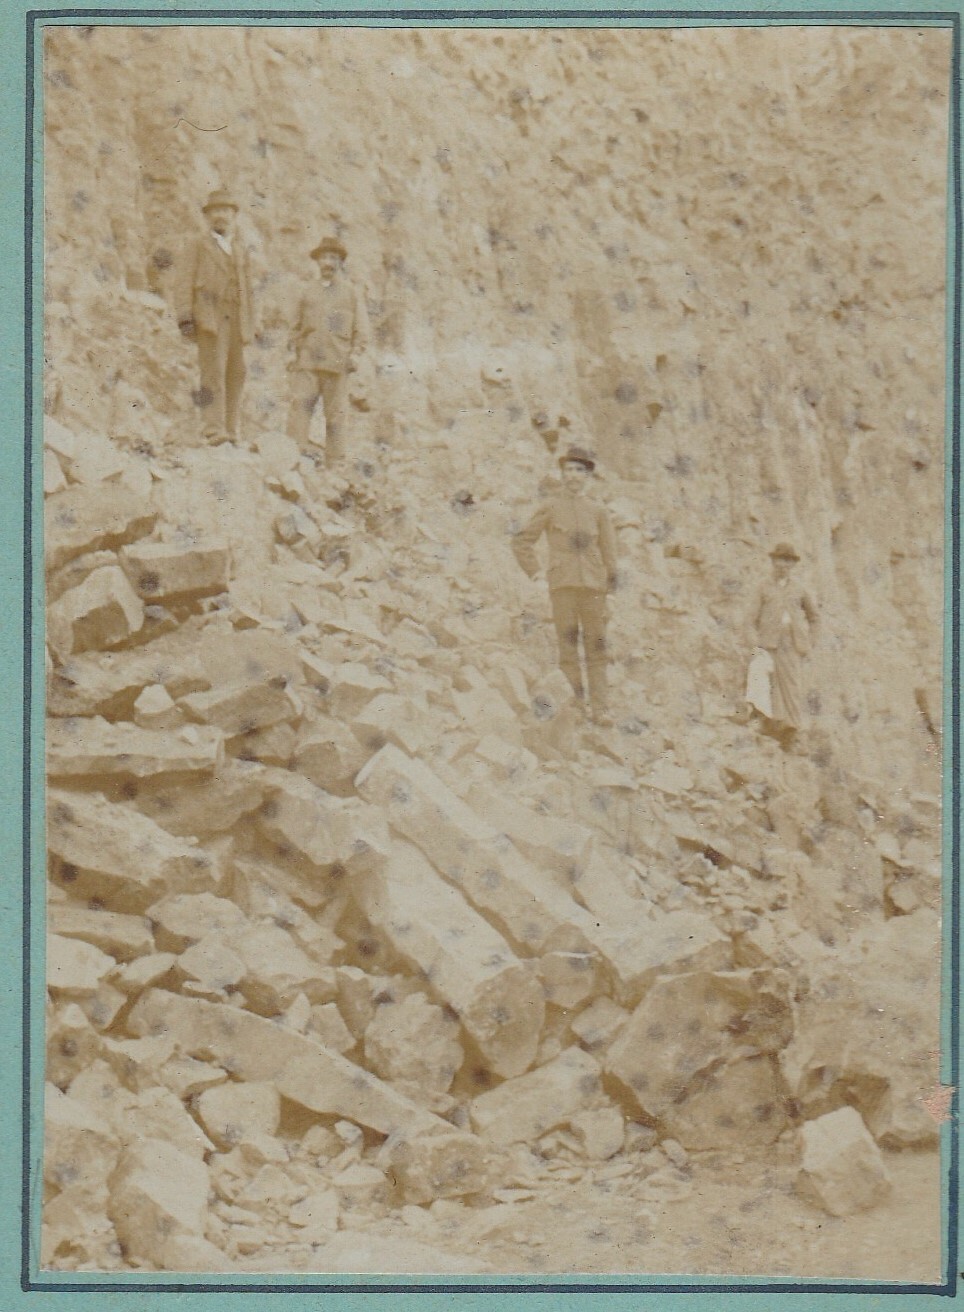 A sarvalyi kőbánya az 1900-as évek elején (Tapolcai Városi Múzeum CC BY-NC-SA)